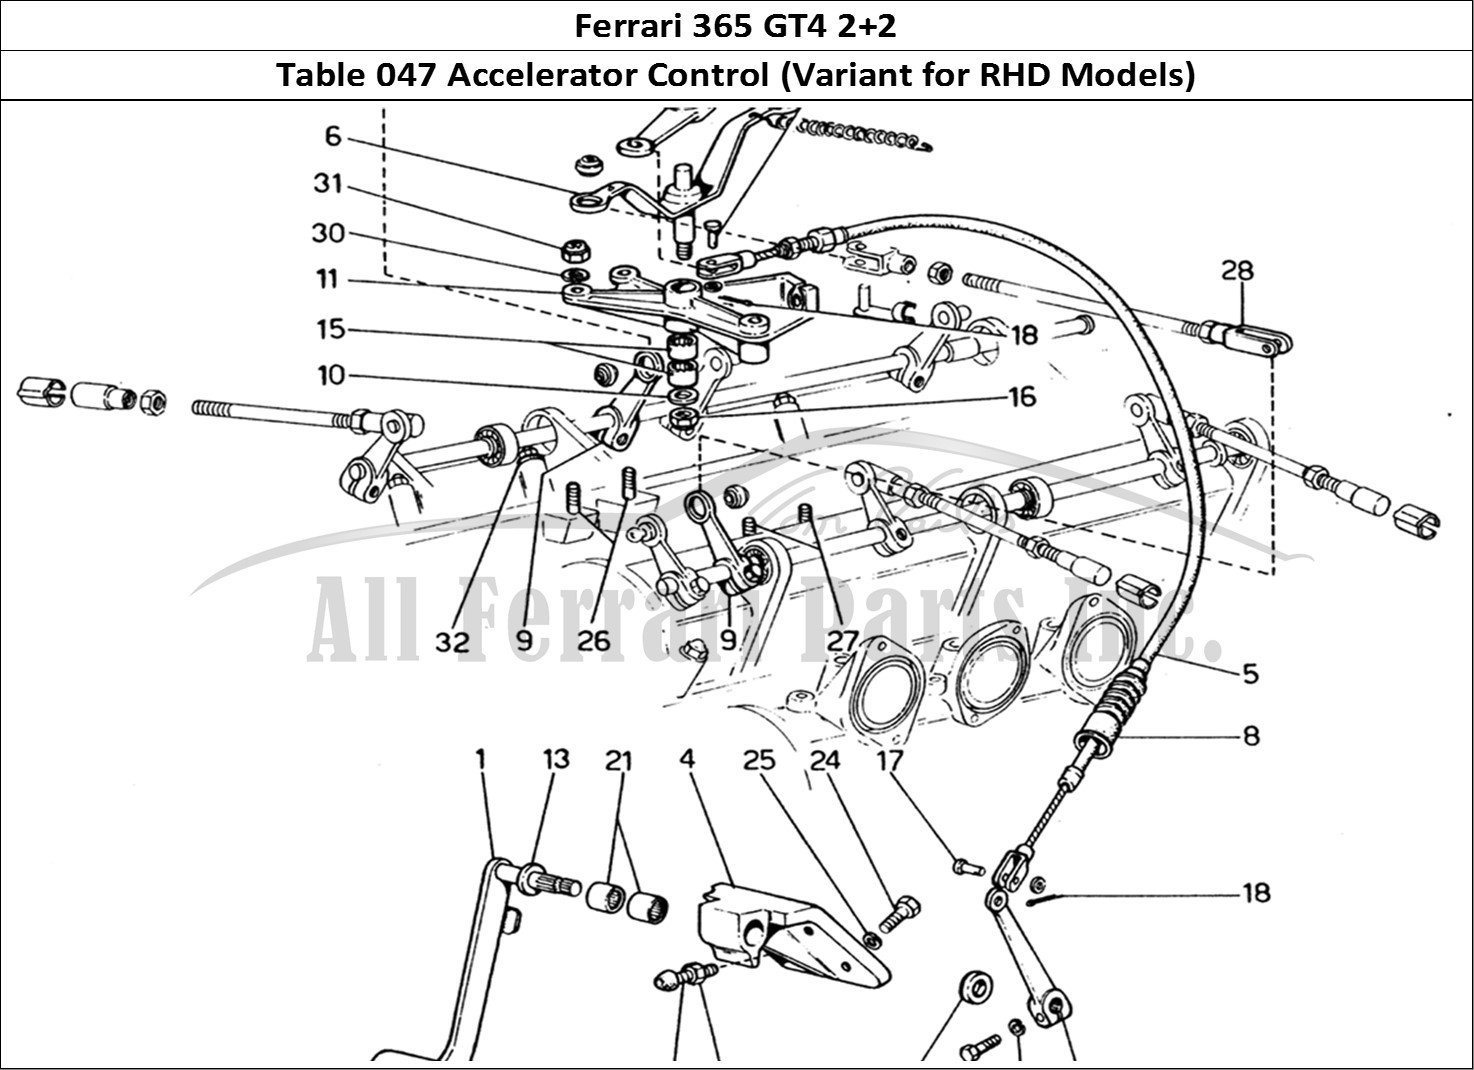 Ferrari Parts Ferrari 365 GT4 2+2 (1973) Page 047 Throttle Control (Variant